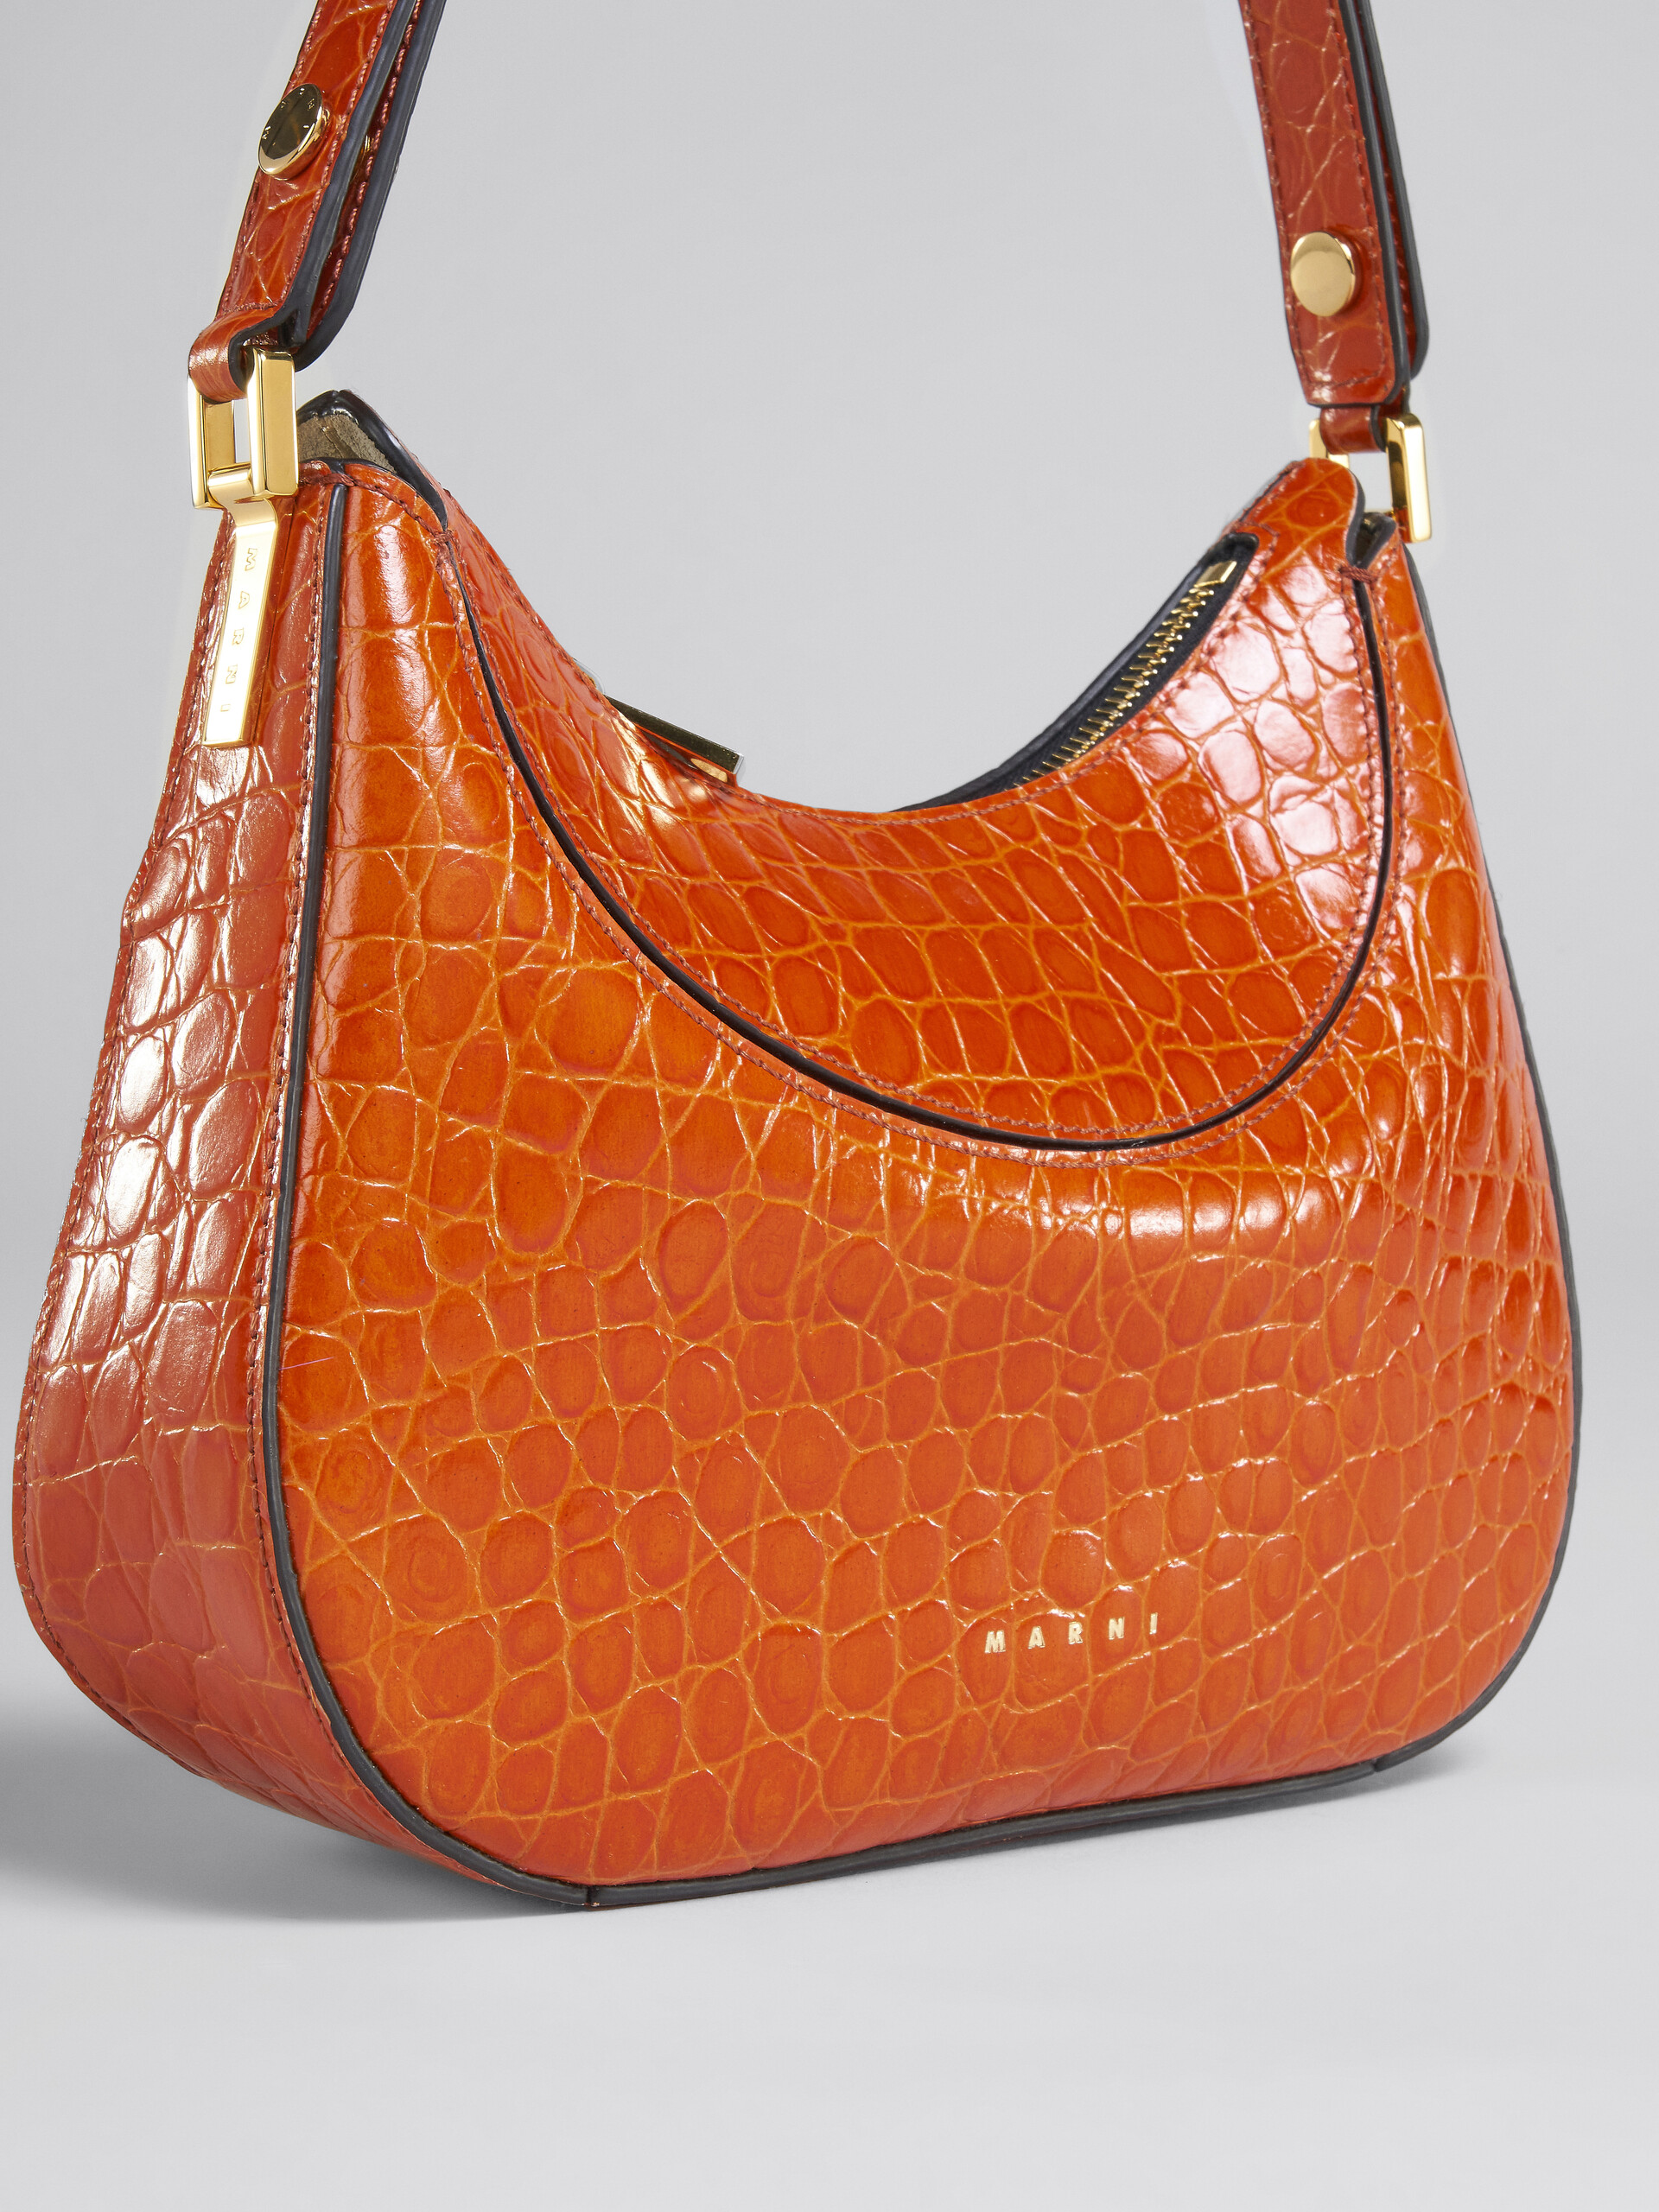 Milano Mini Bag in orange croco print leather - Handbag - Image 5